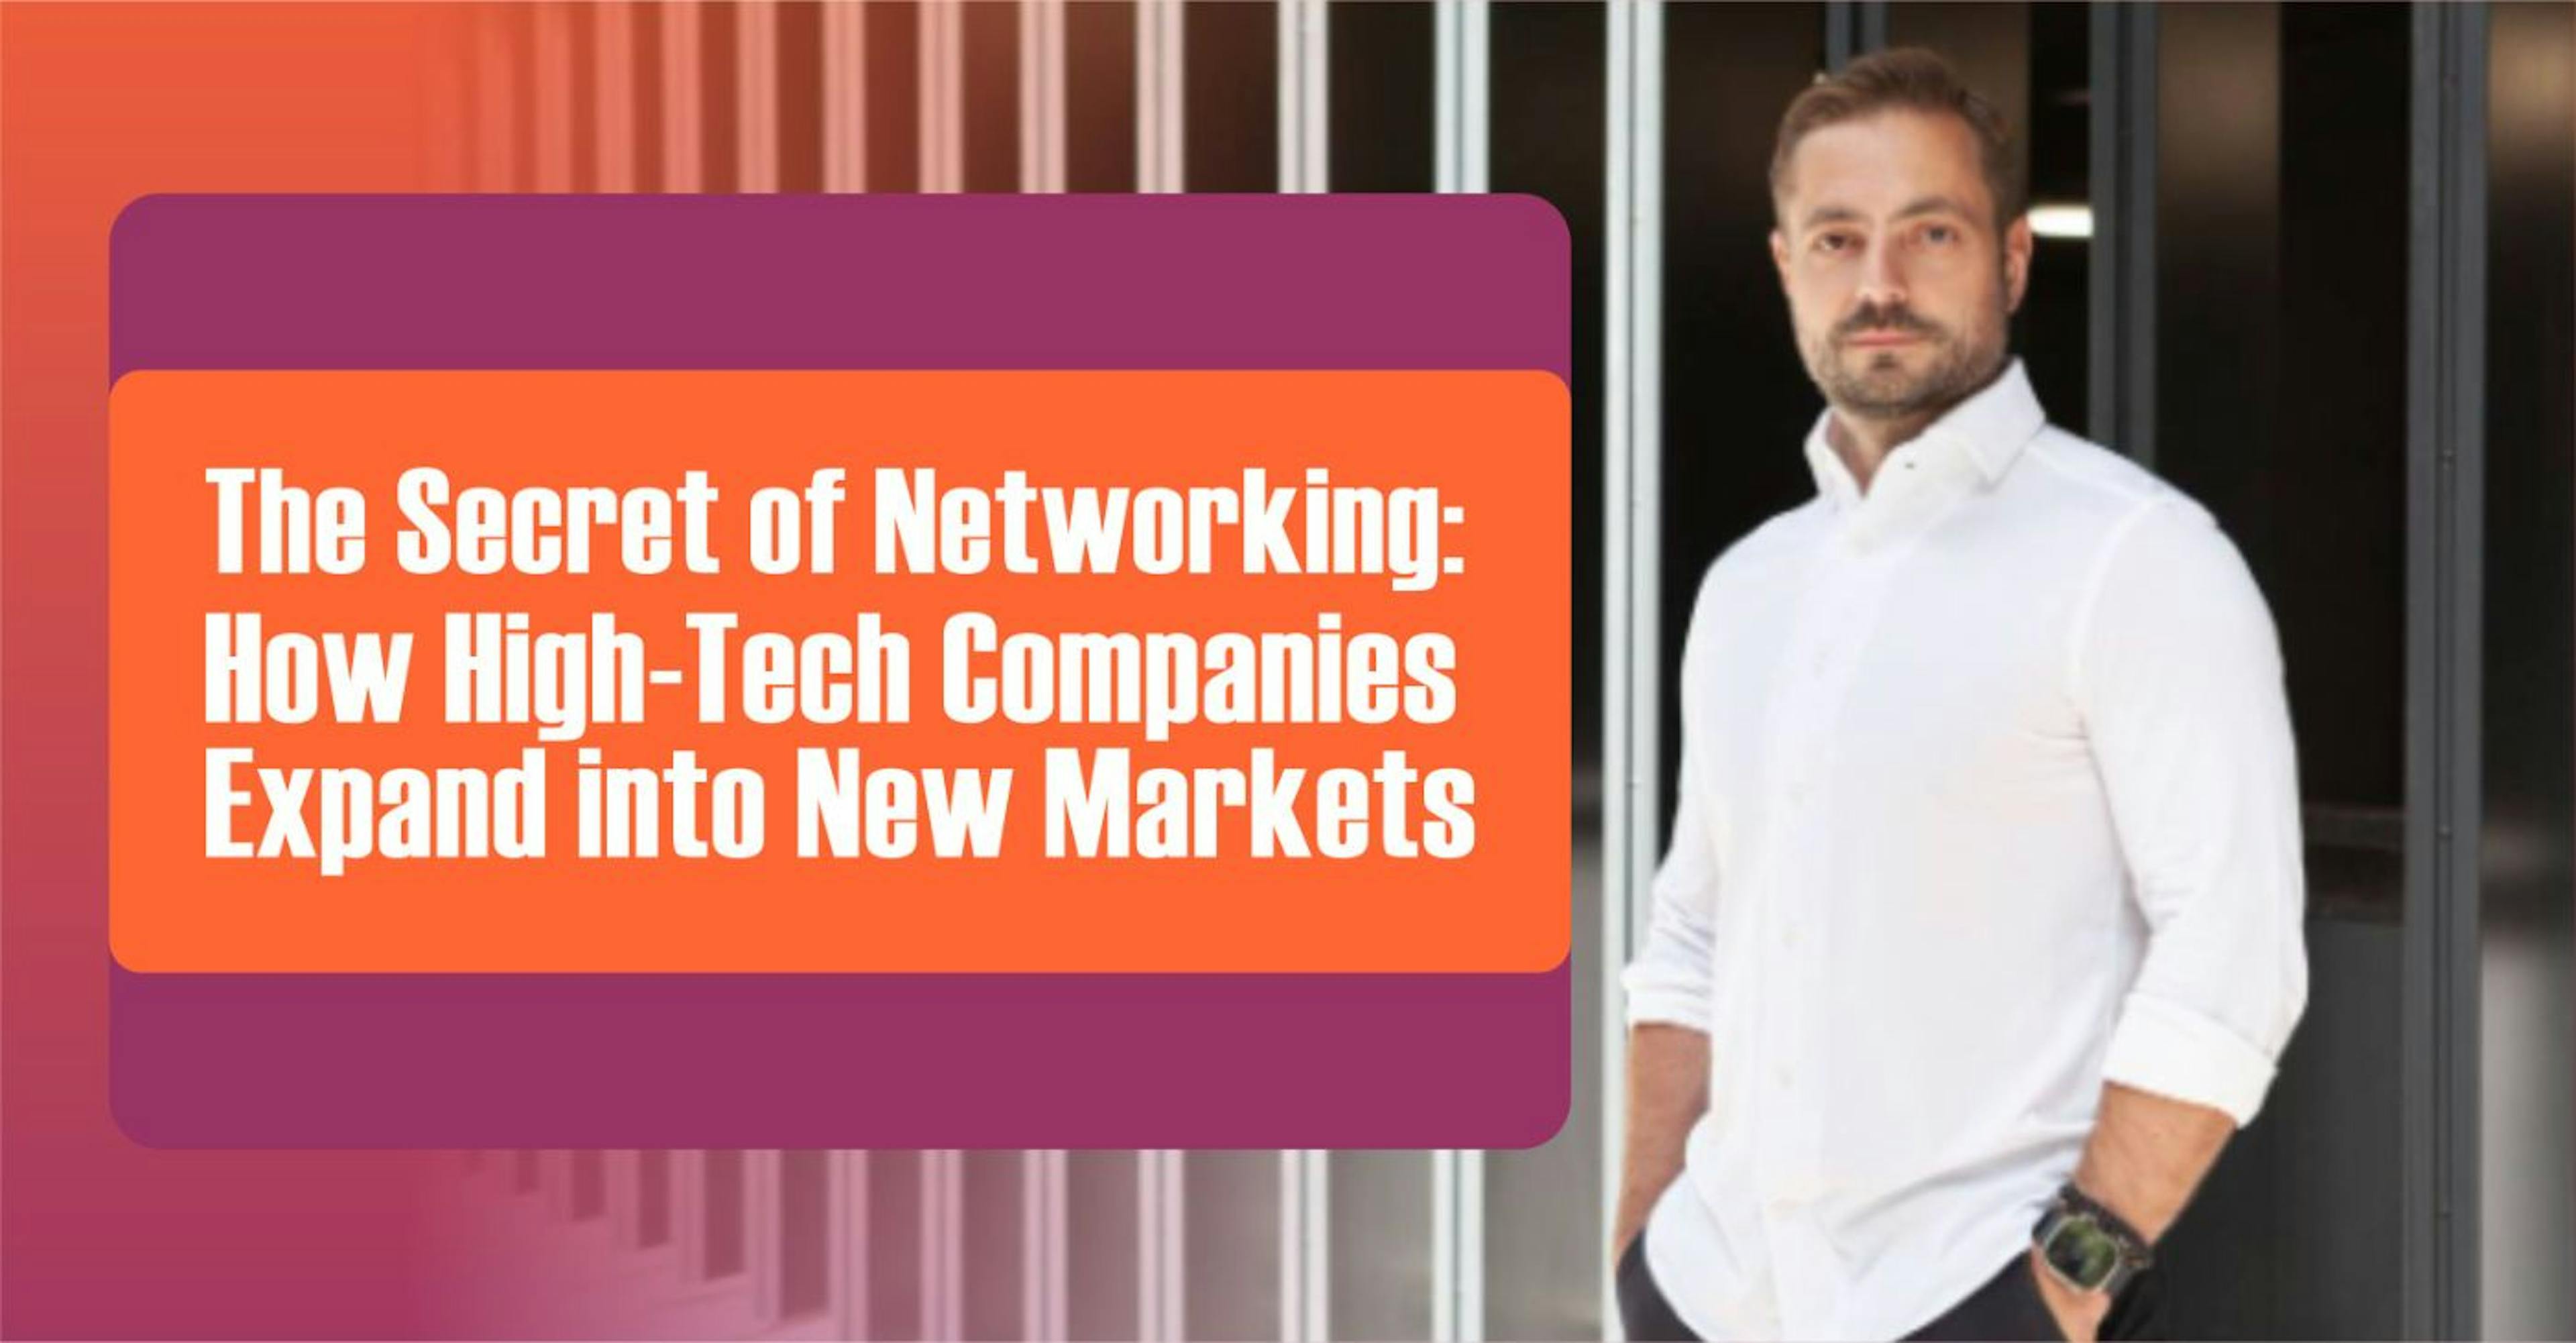 featured image - O segredo do networking: como as empresas de alta tecnologia se expandem para novos mercados